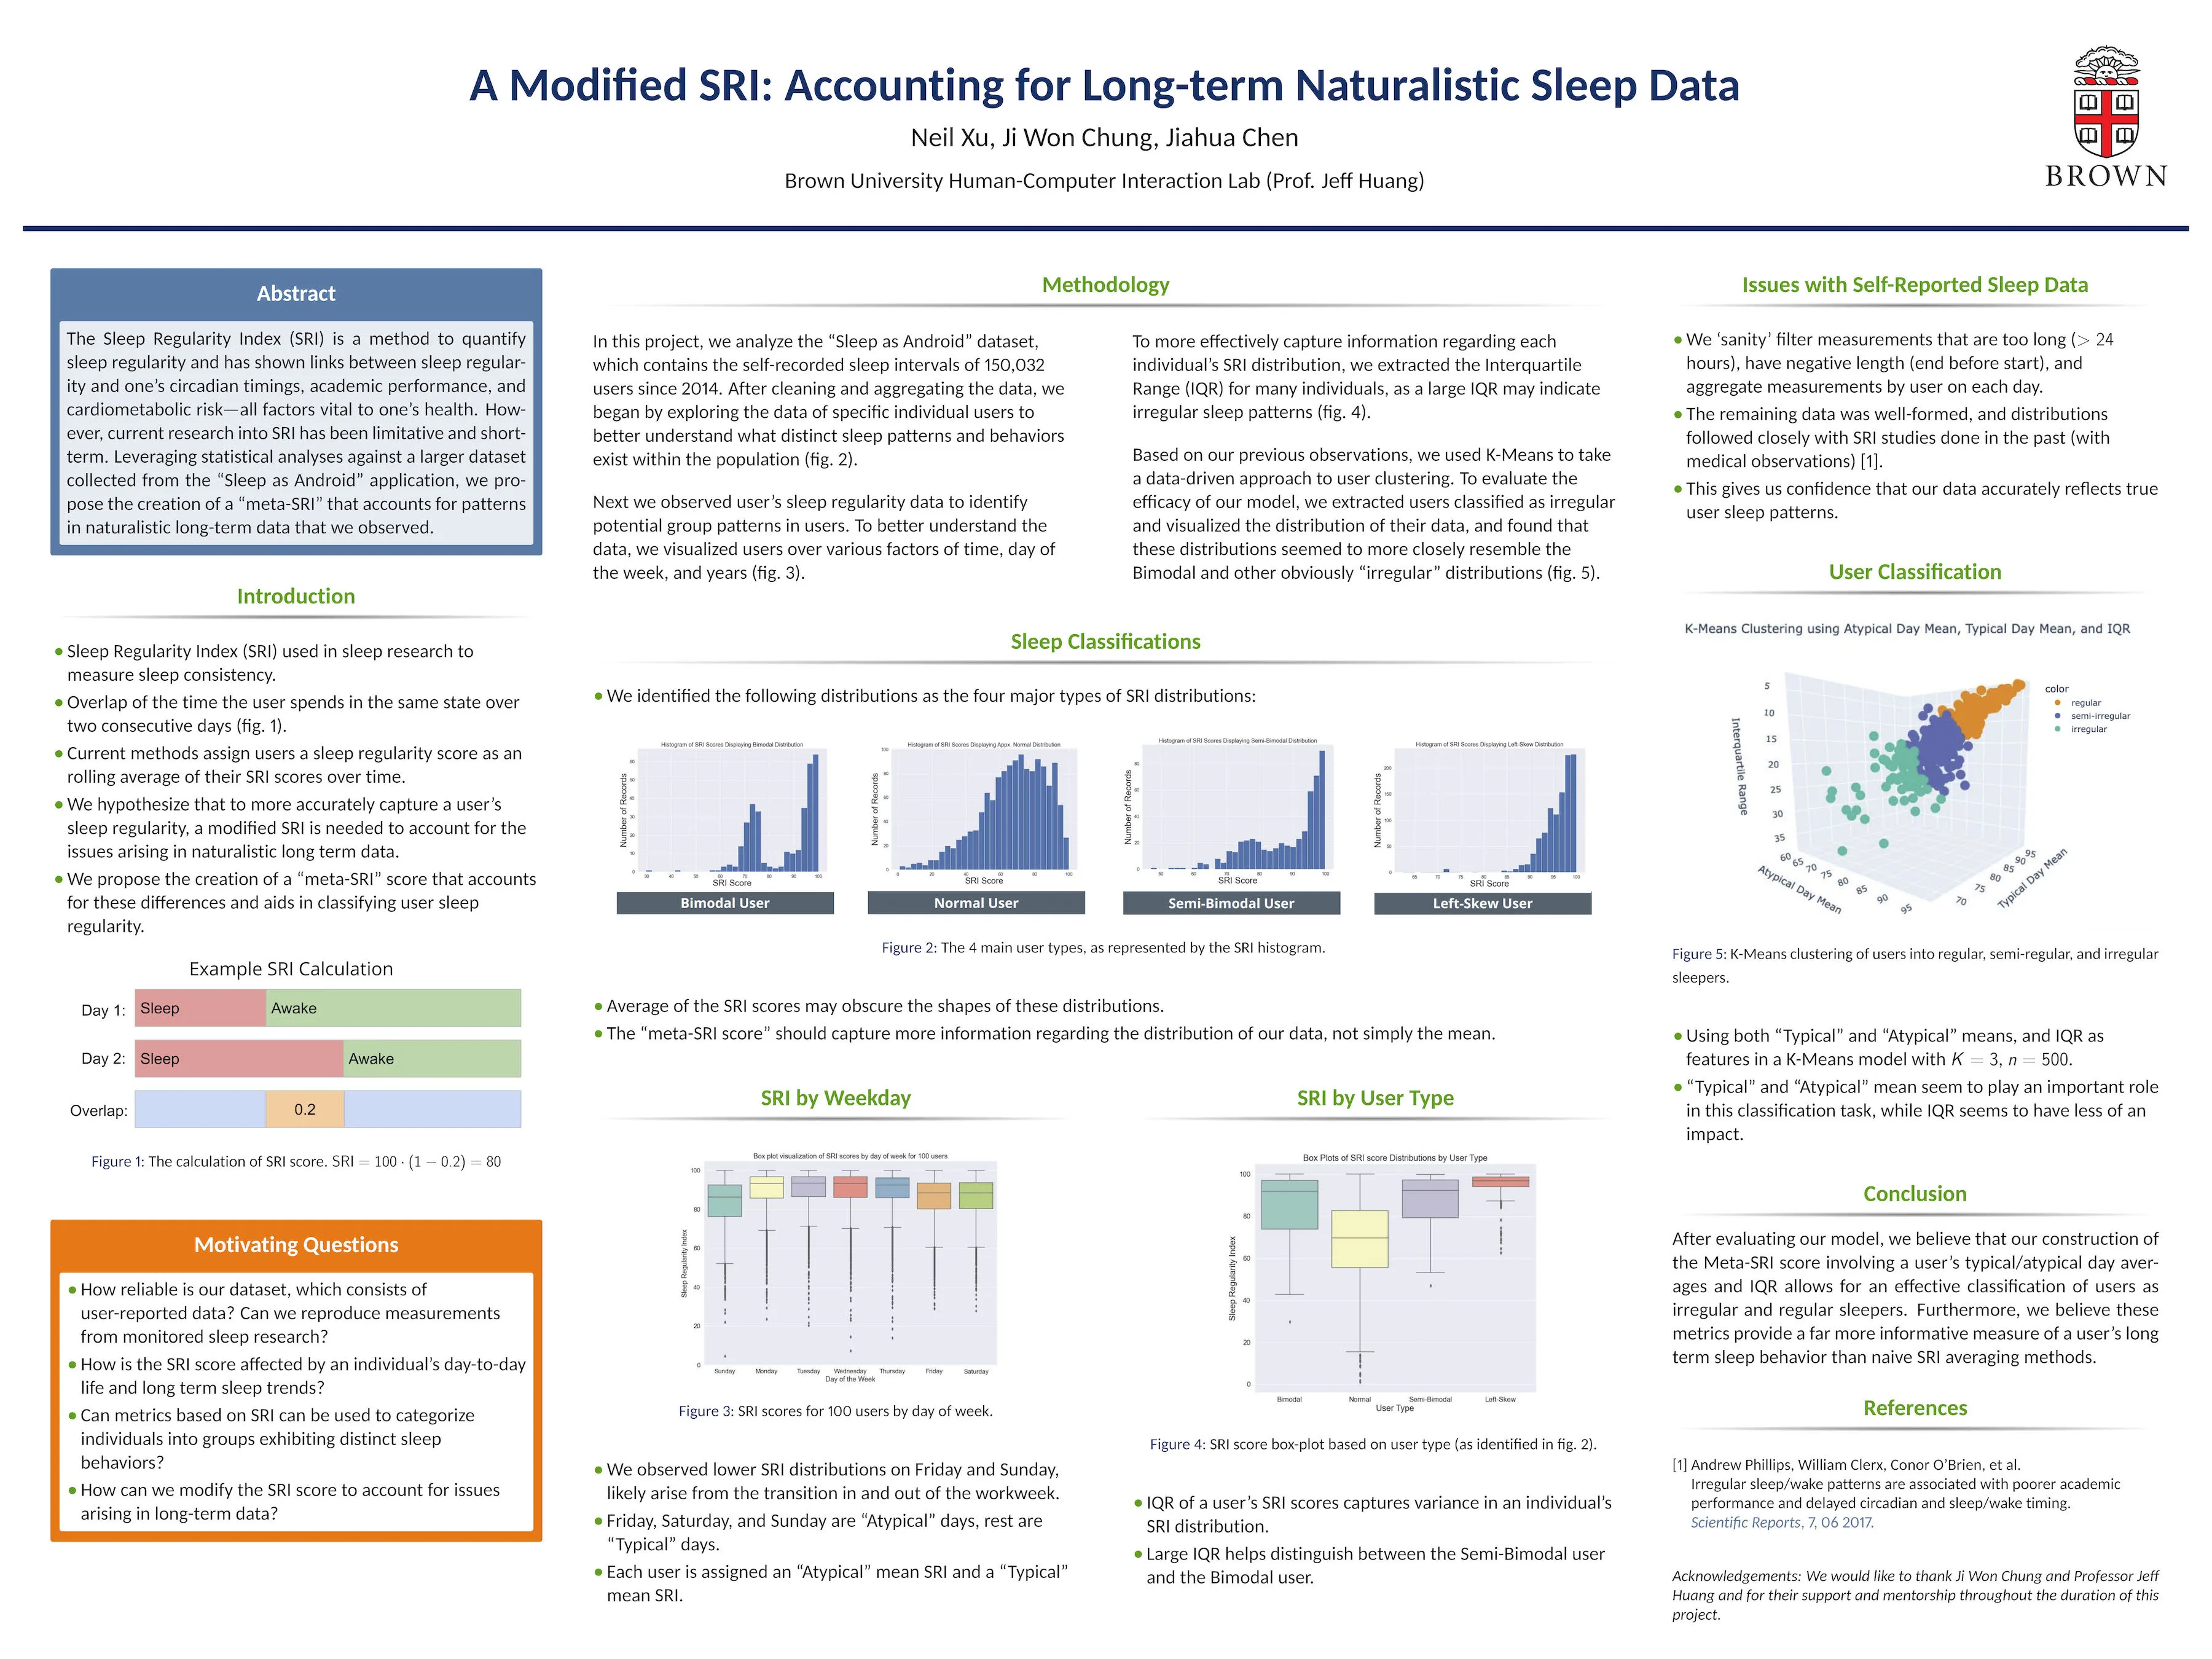 Sleep Regularity Index Poster